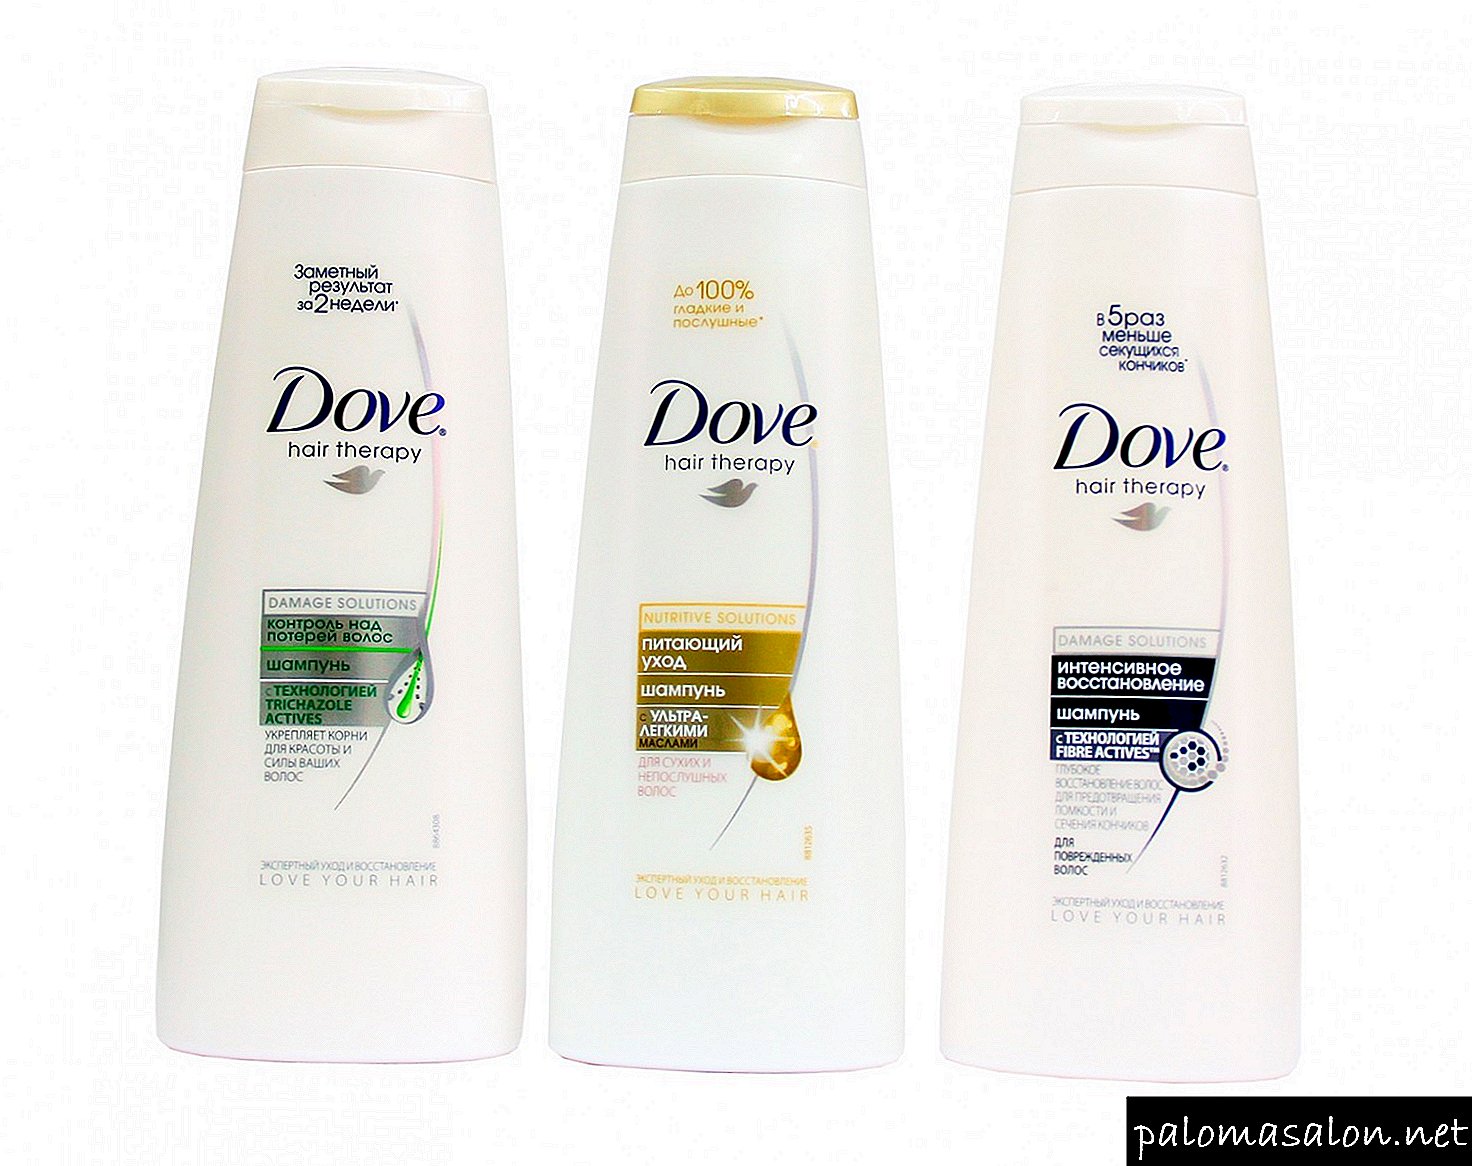 Shampo Dove - 8 jenis solusi rambut efektif